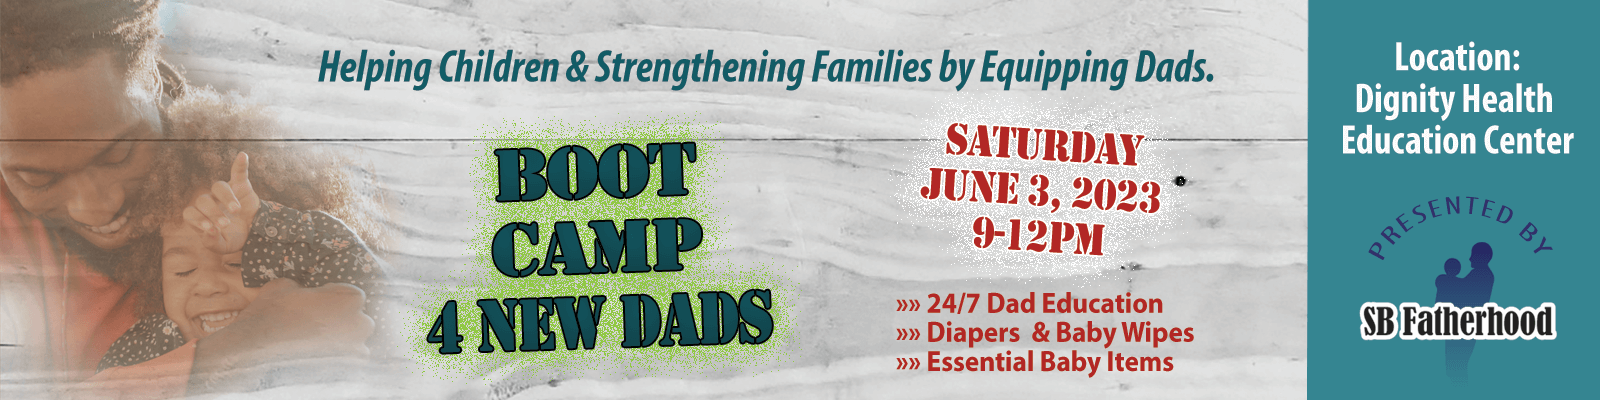 Boot Camp for New Dads - SB Fatherhood